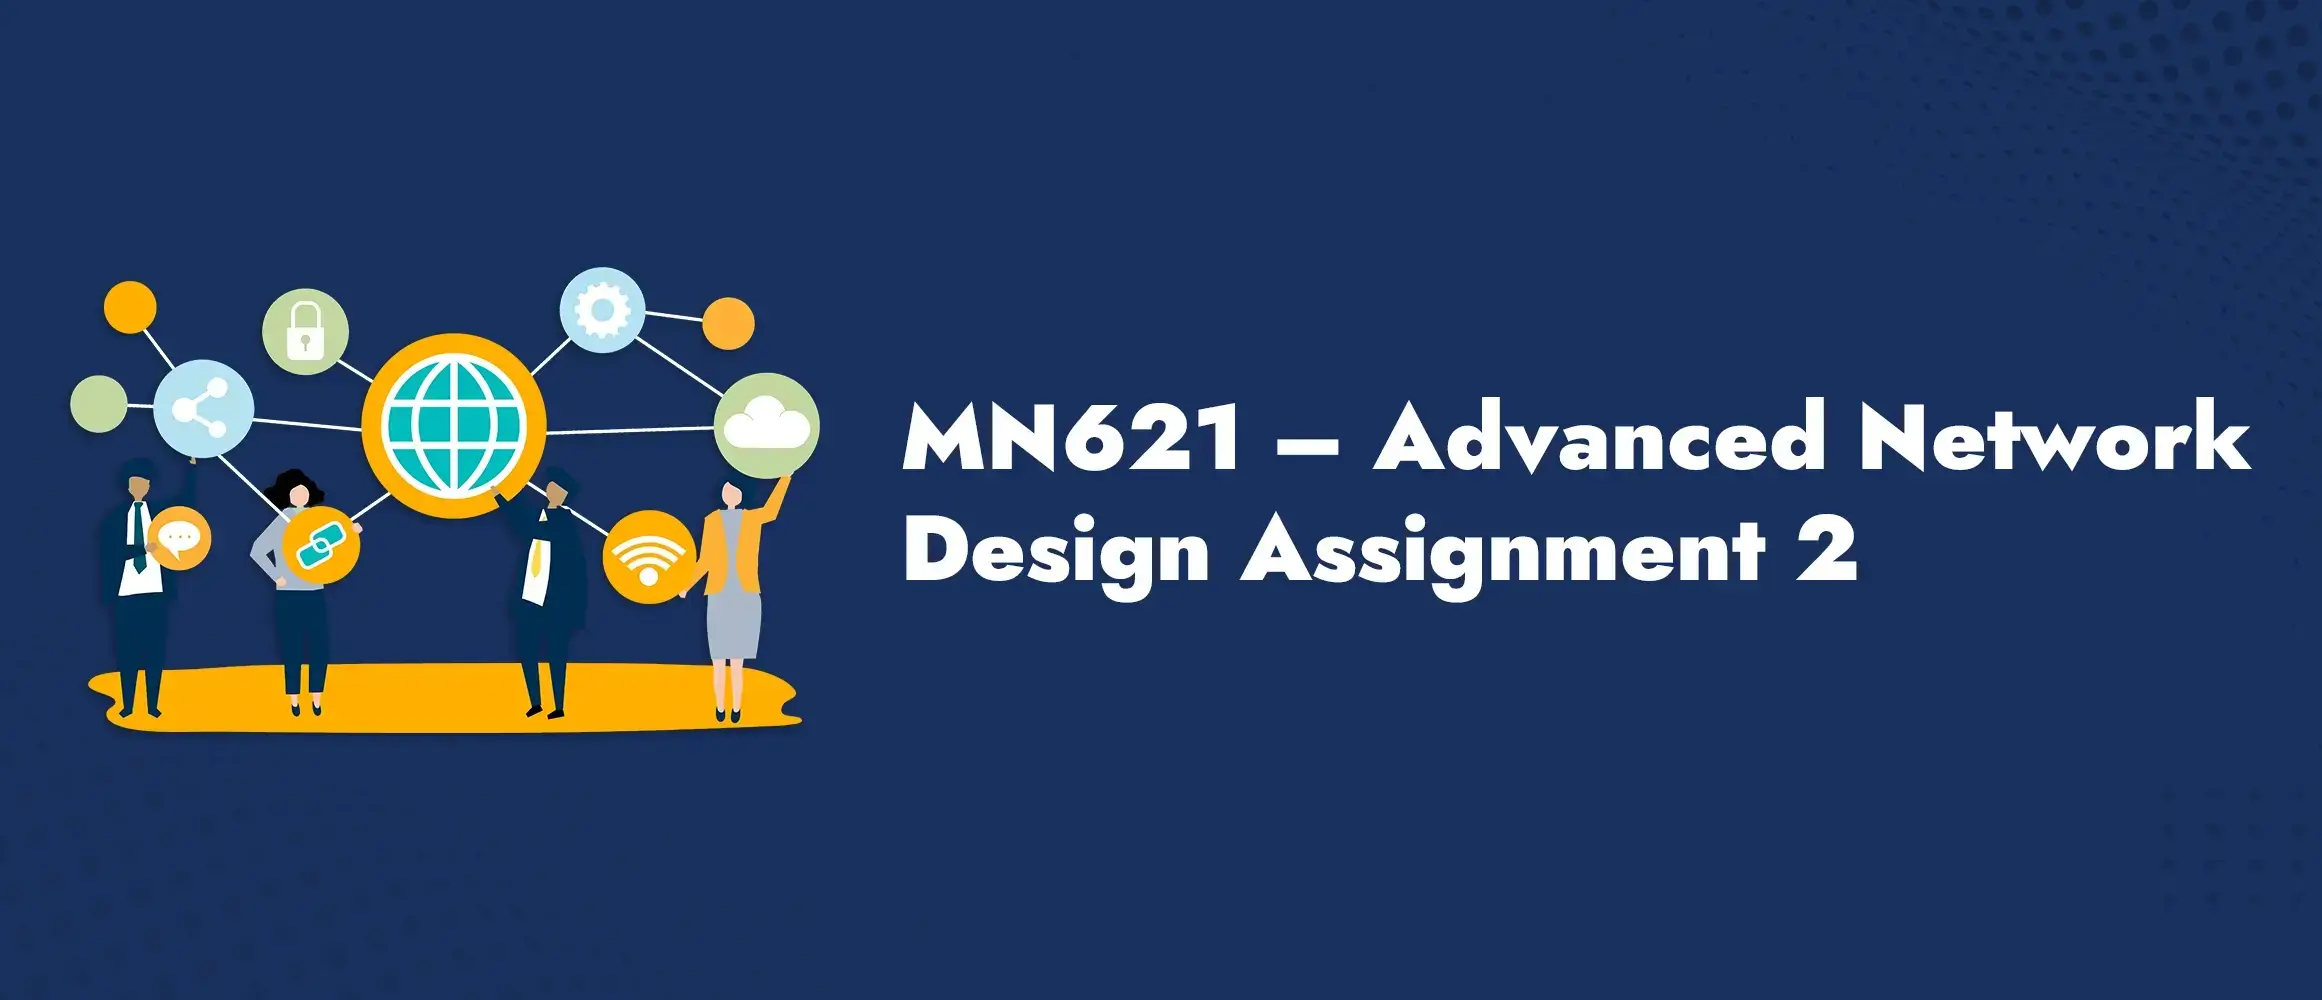 MN621 Advanced Network Design Assignment 2